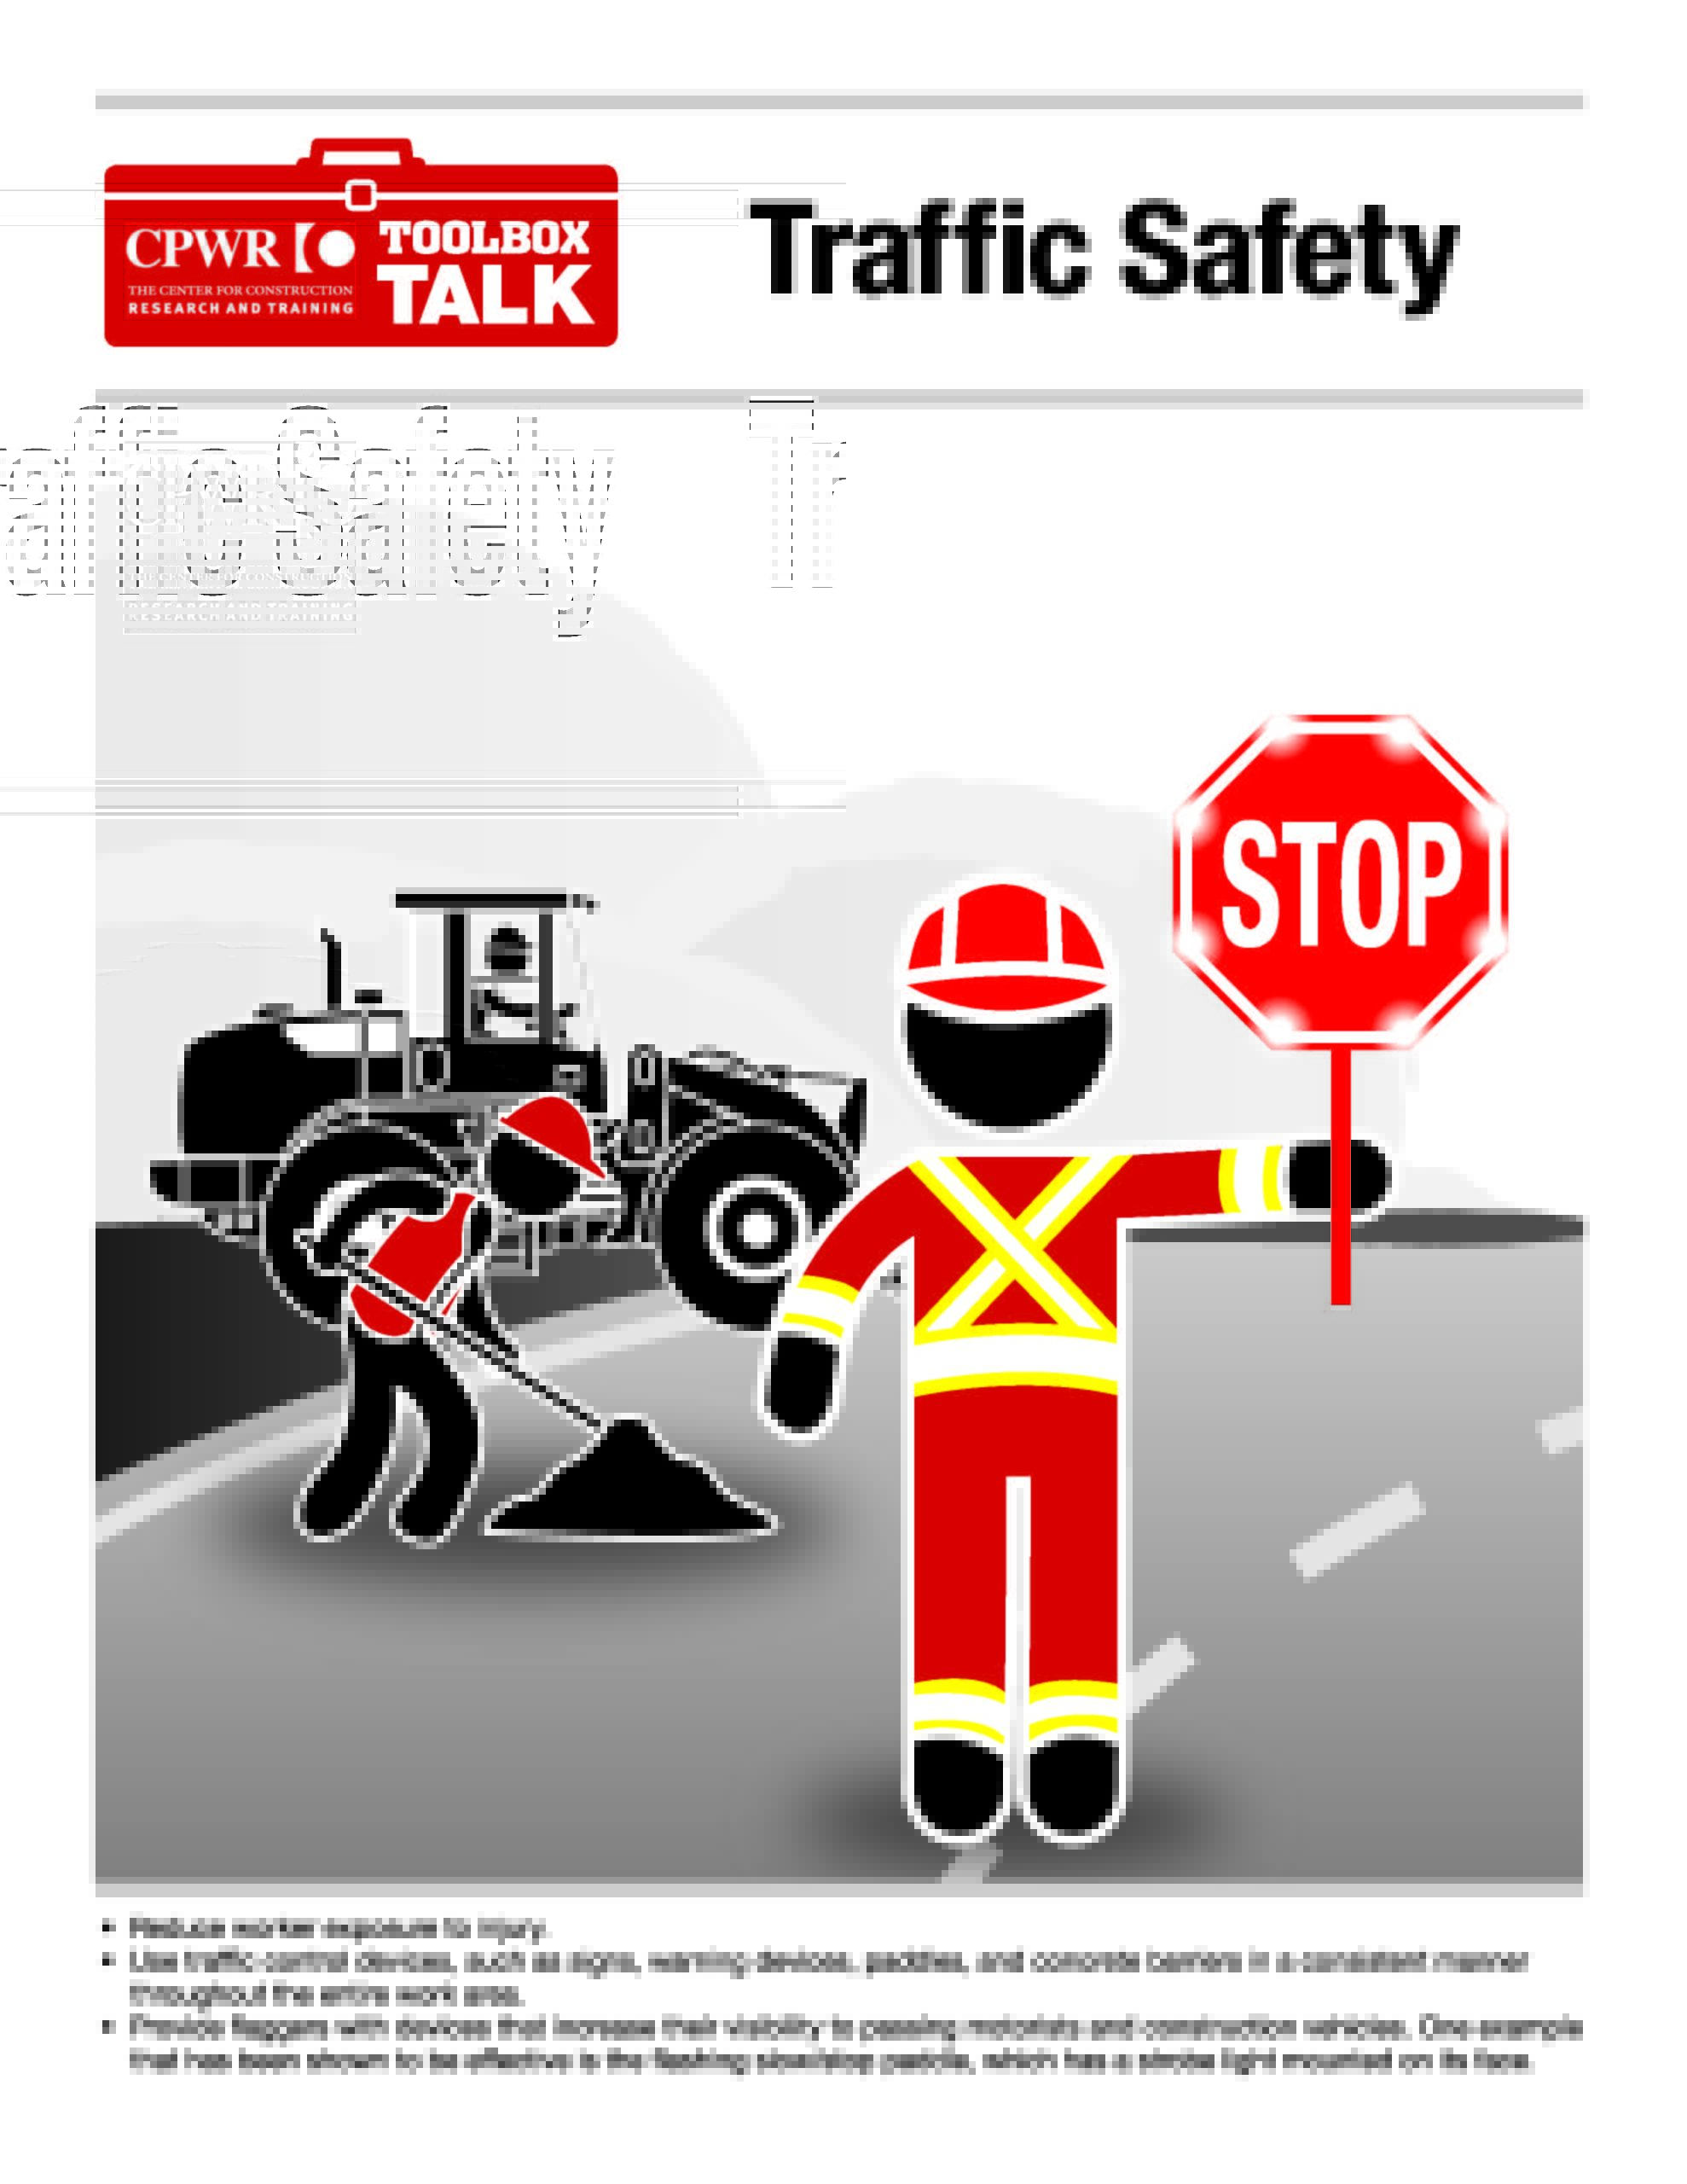 CPWR_Traffic_Safety